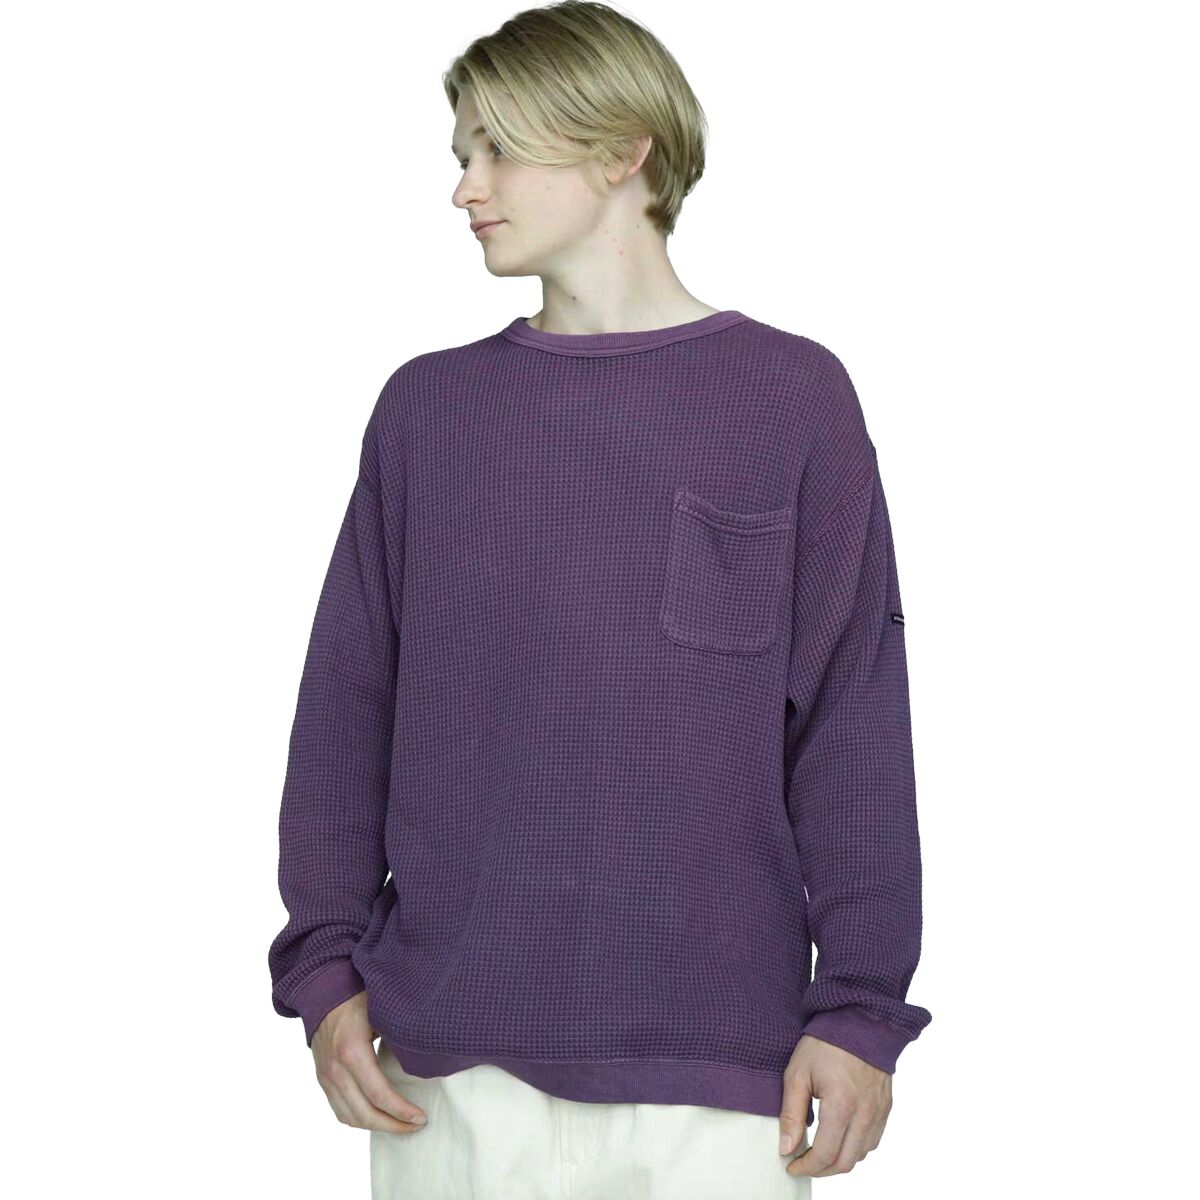 Heavy Snug Thermal Long-Sleeve T-Shirt - Men